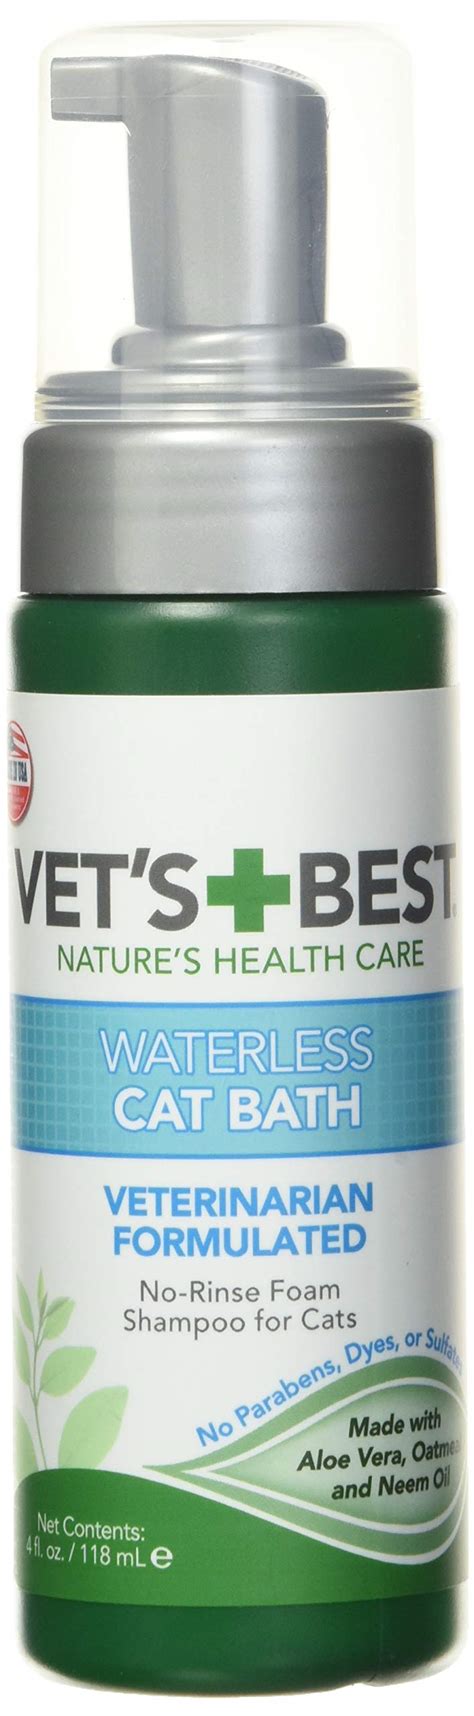 vet s best waterless cat bath no rinse waterless dry shampoo for cats natural formula 4